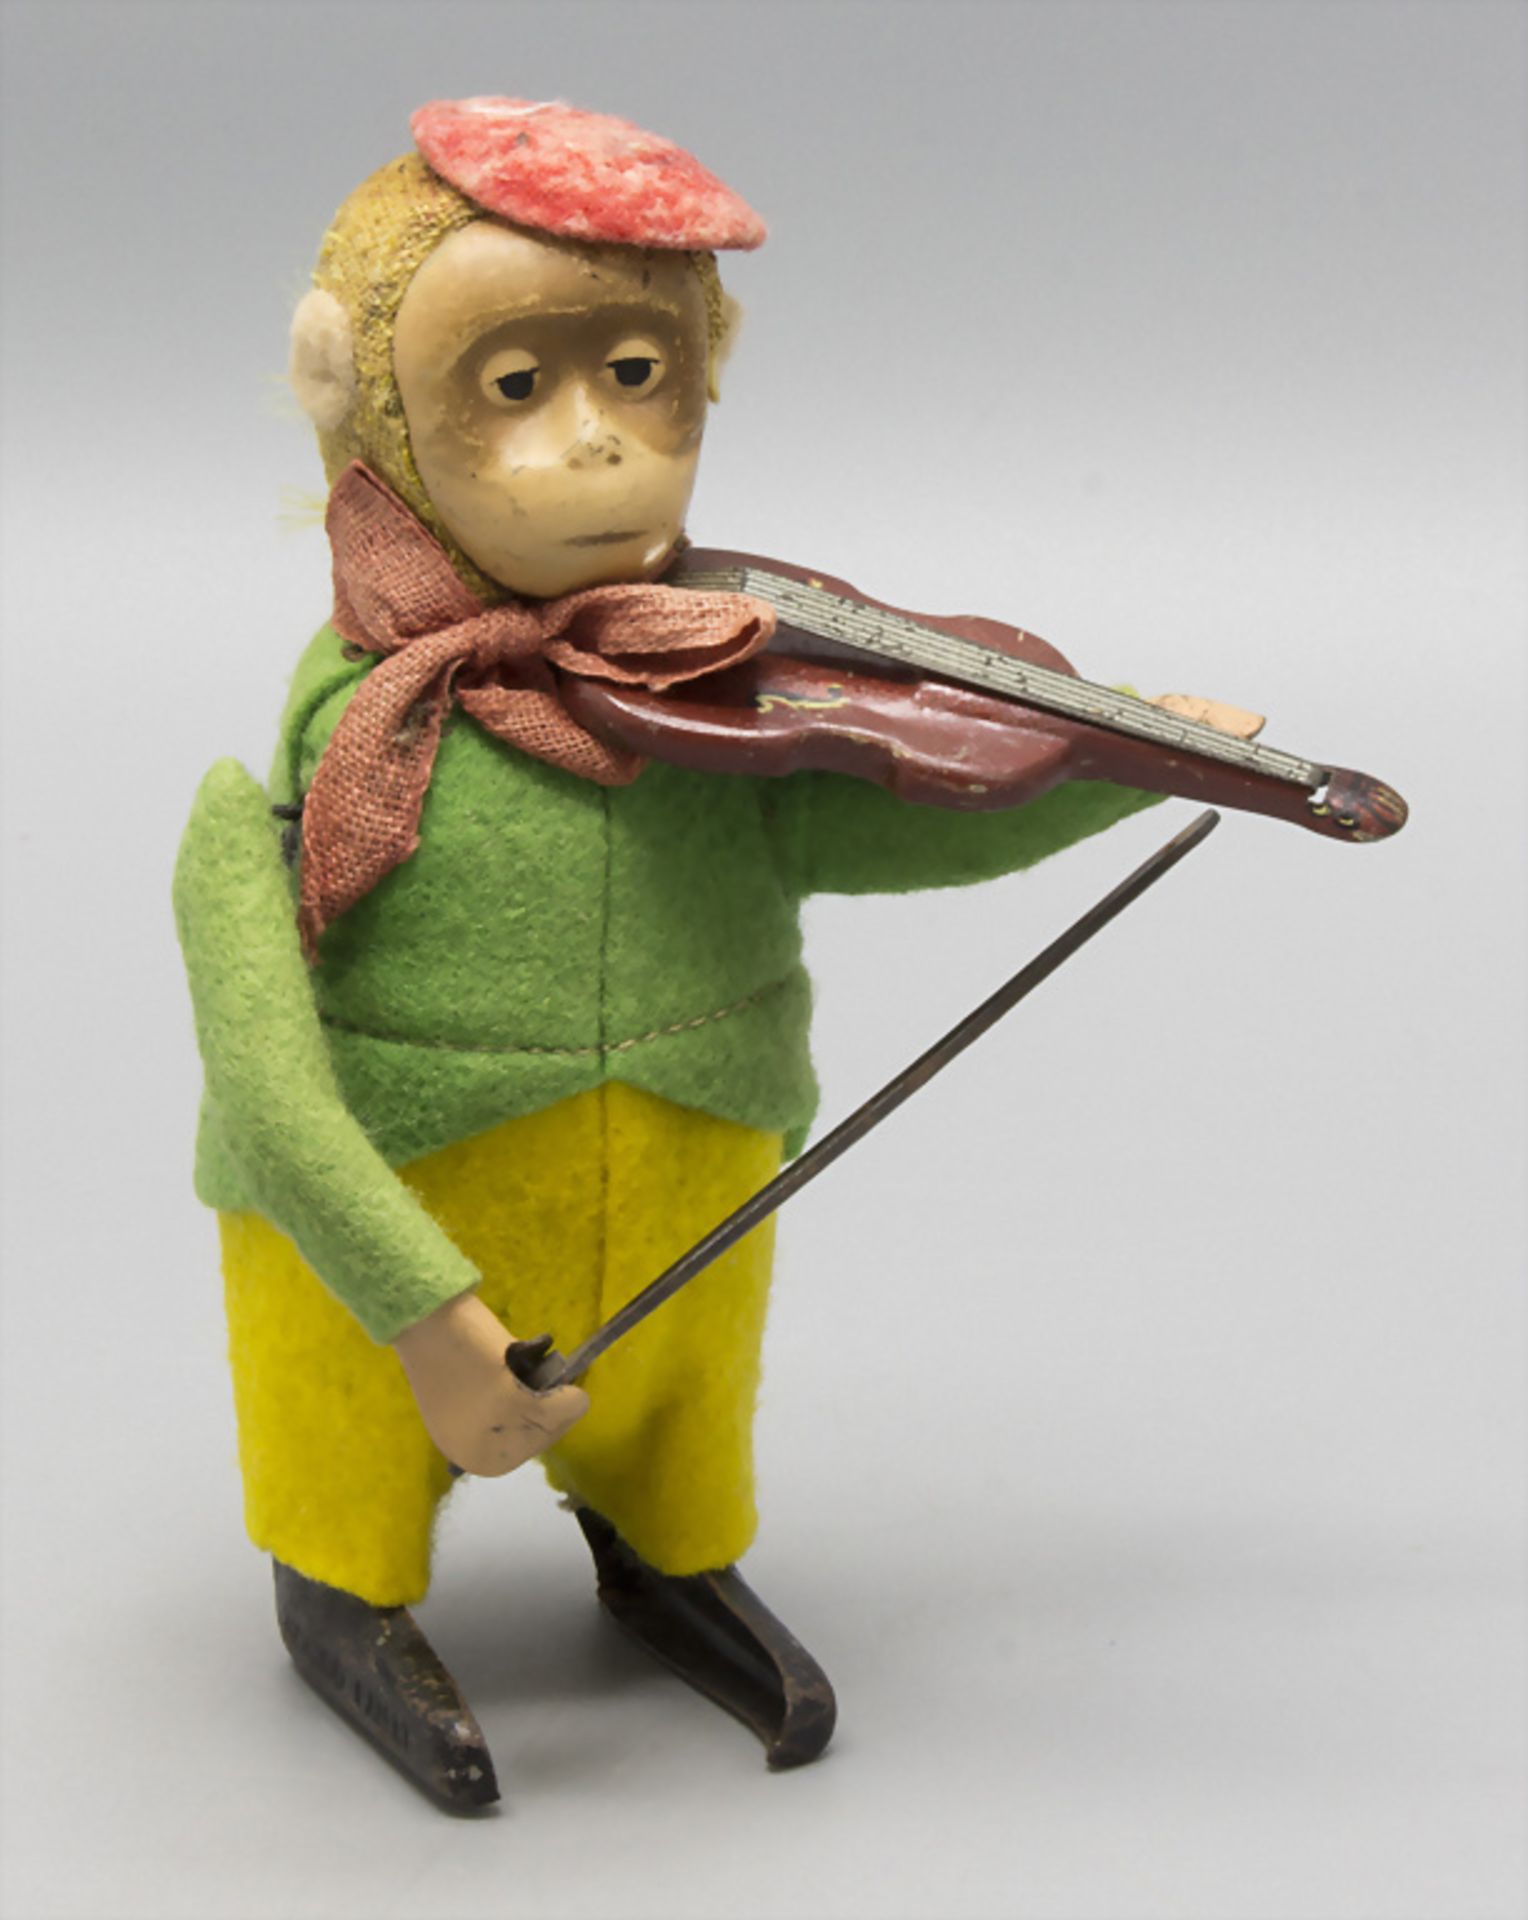 Geigespielender Affe / A violin playing ape, Schuco